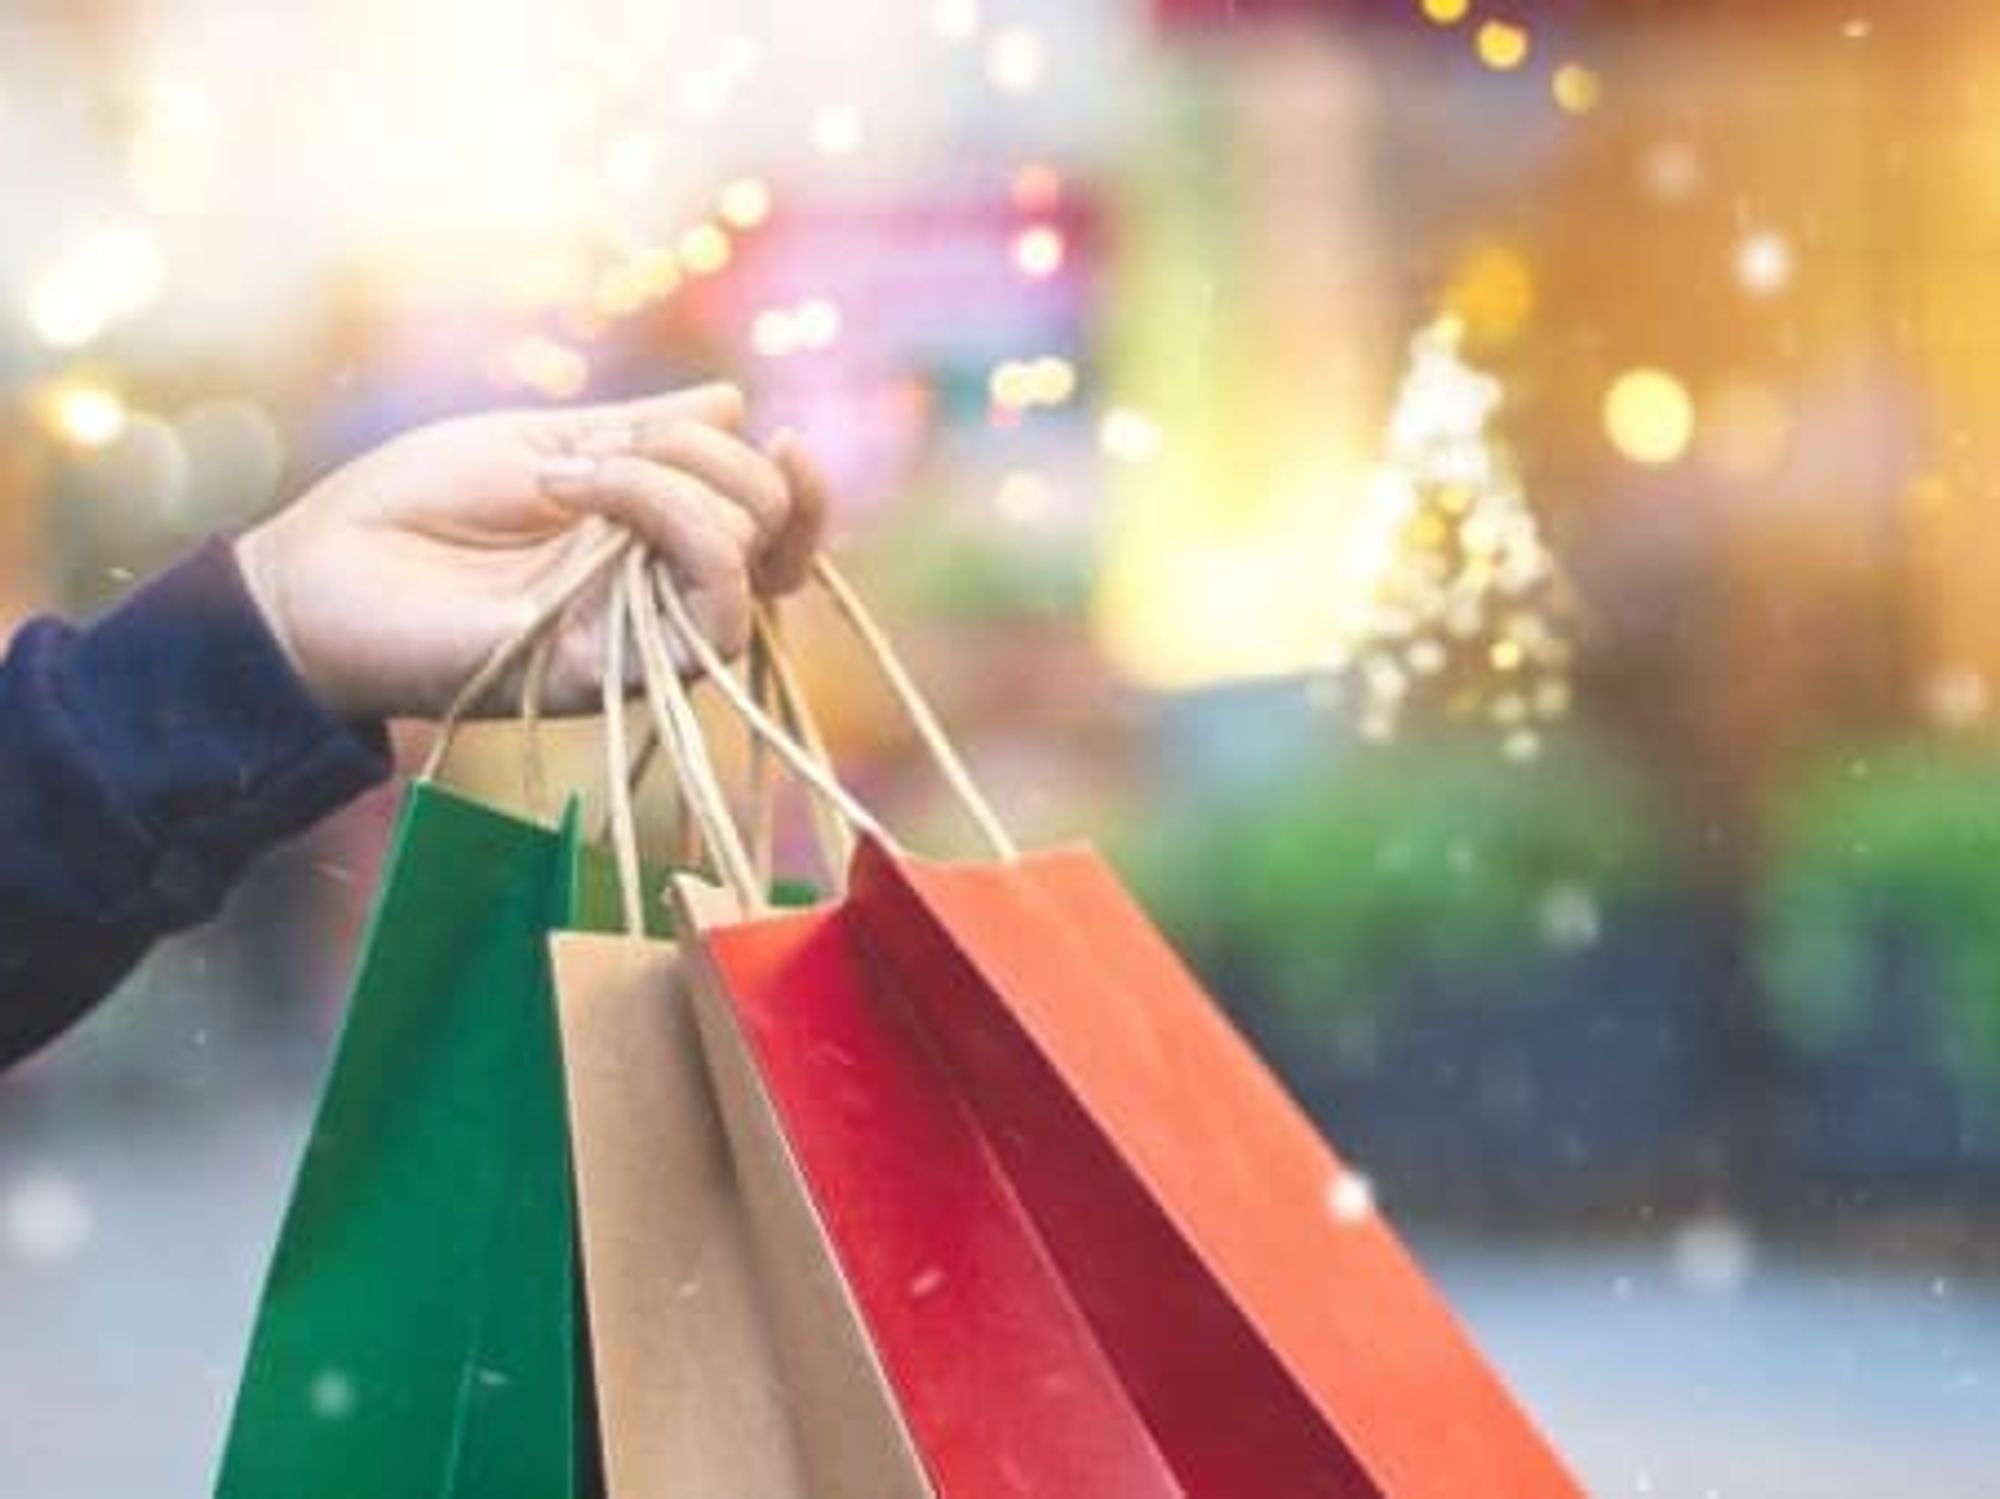 Christmas shopping, holiday shopping, holiday budgets